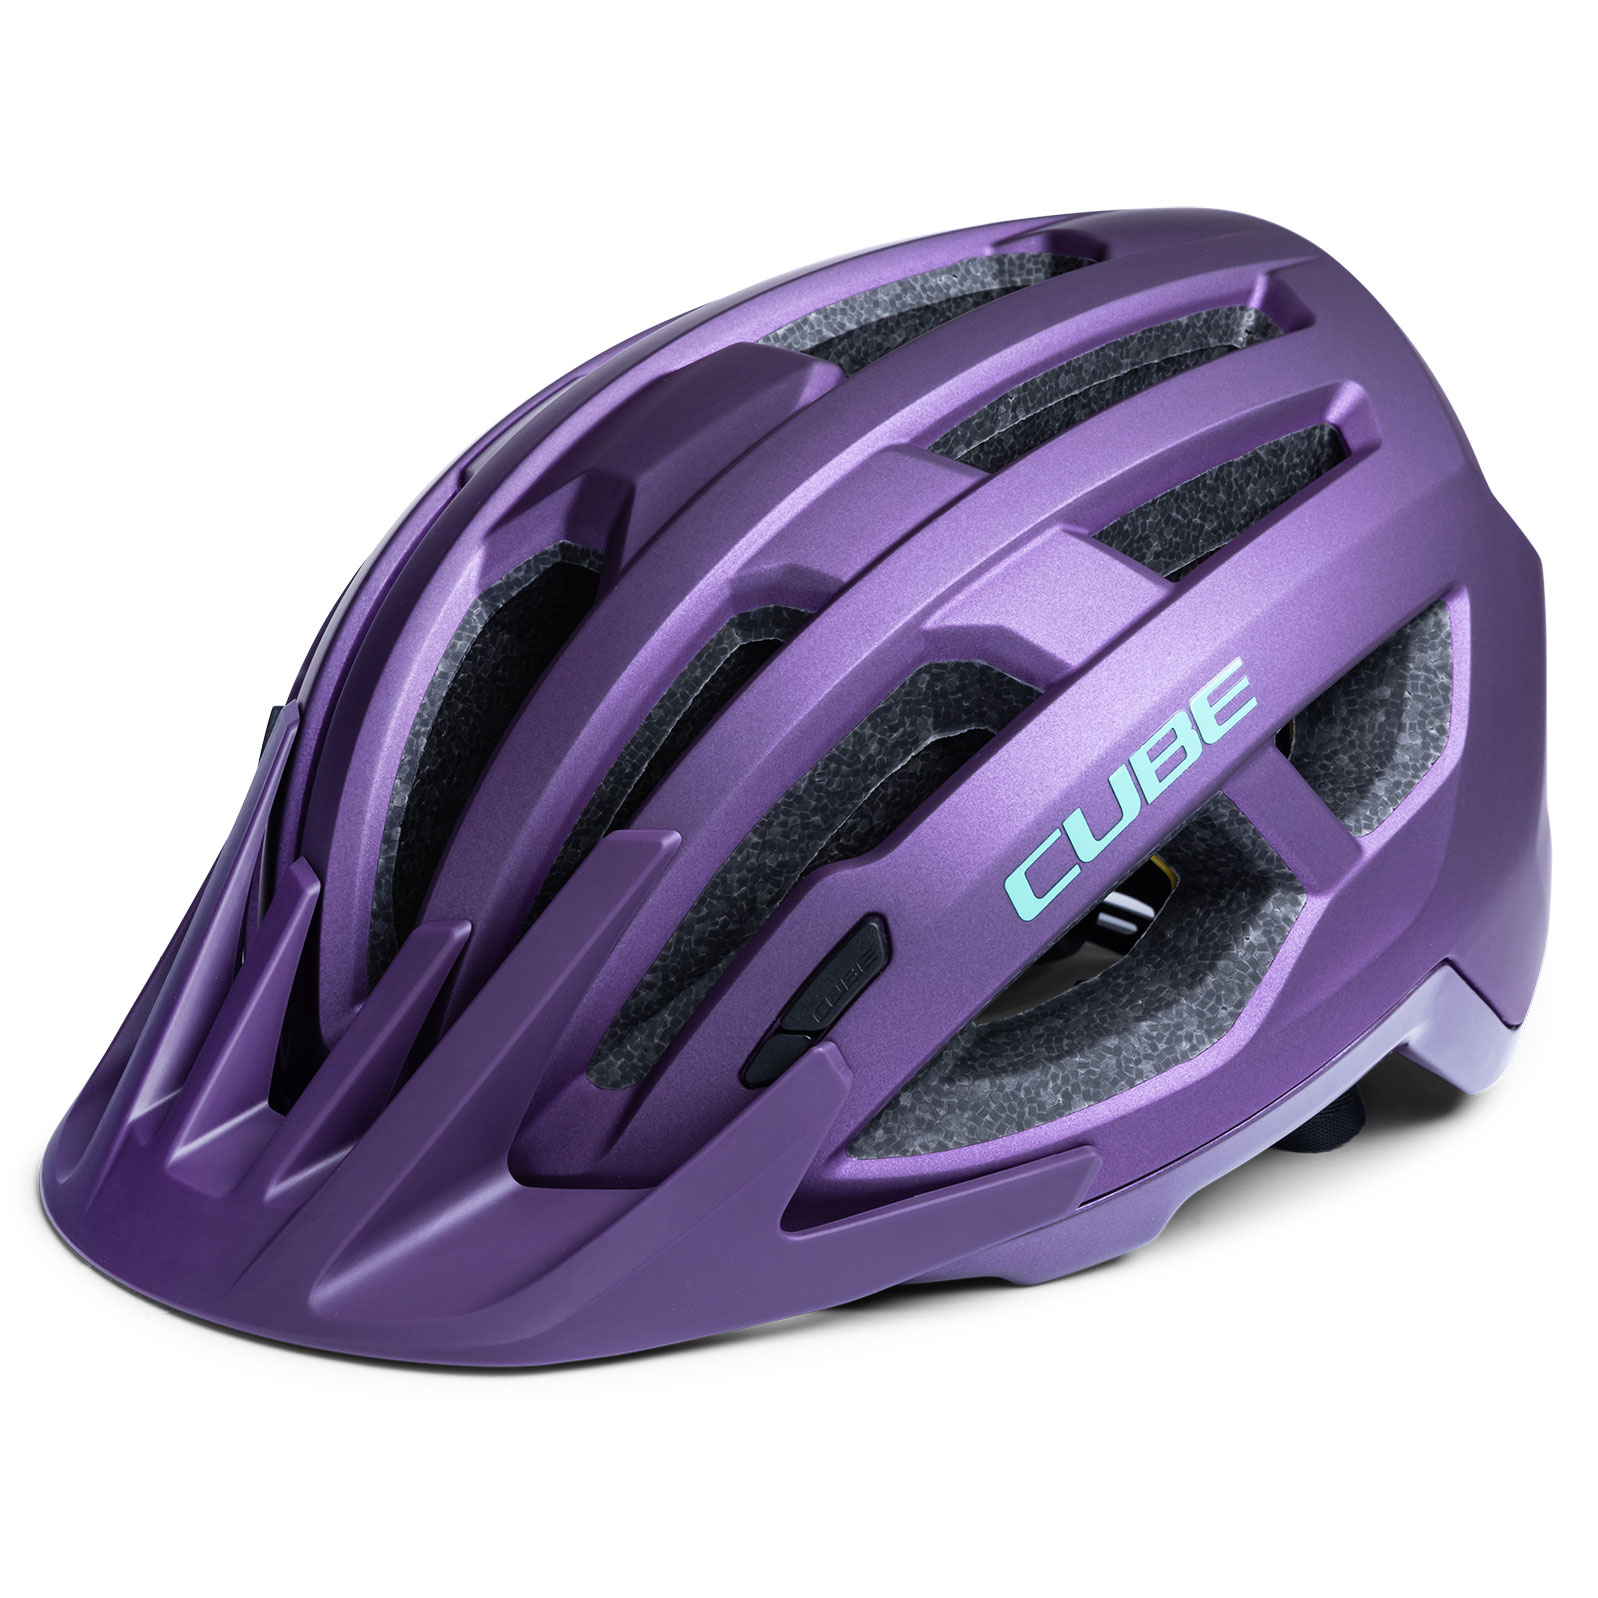 https://images.bike24.com/i/mb/fe/f3/89/cube-offpath-purple-16433-1-1579819.jpg